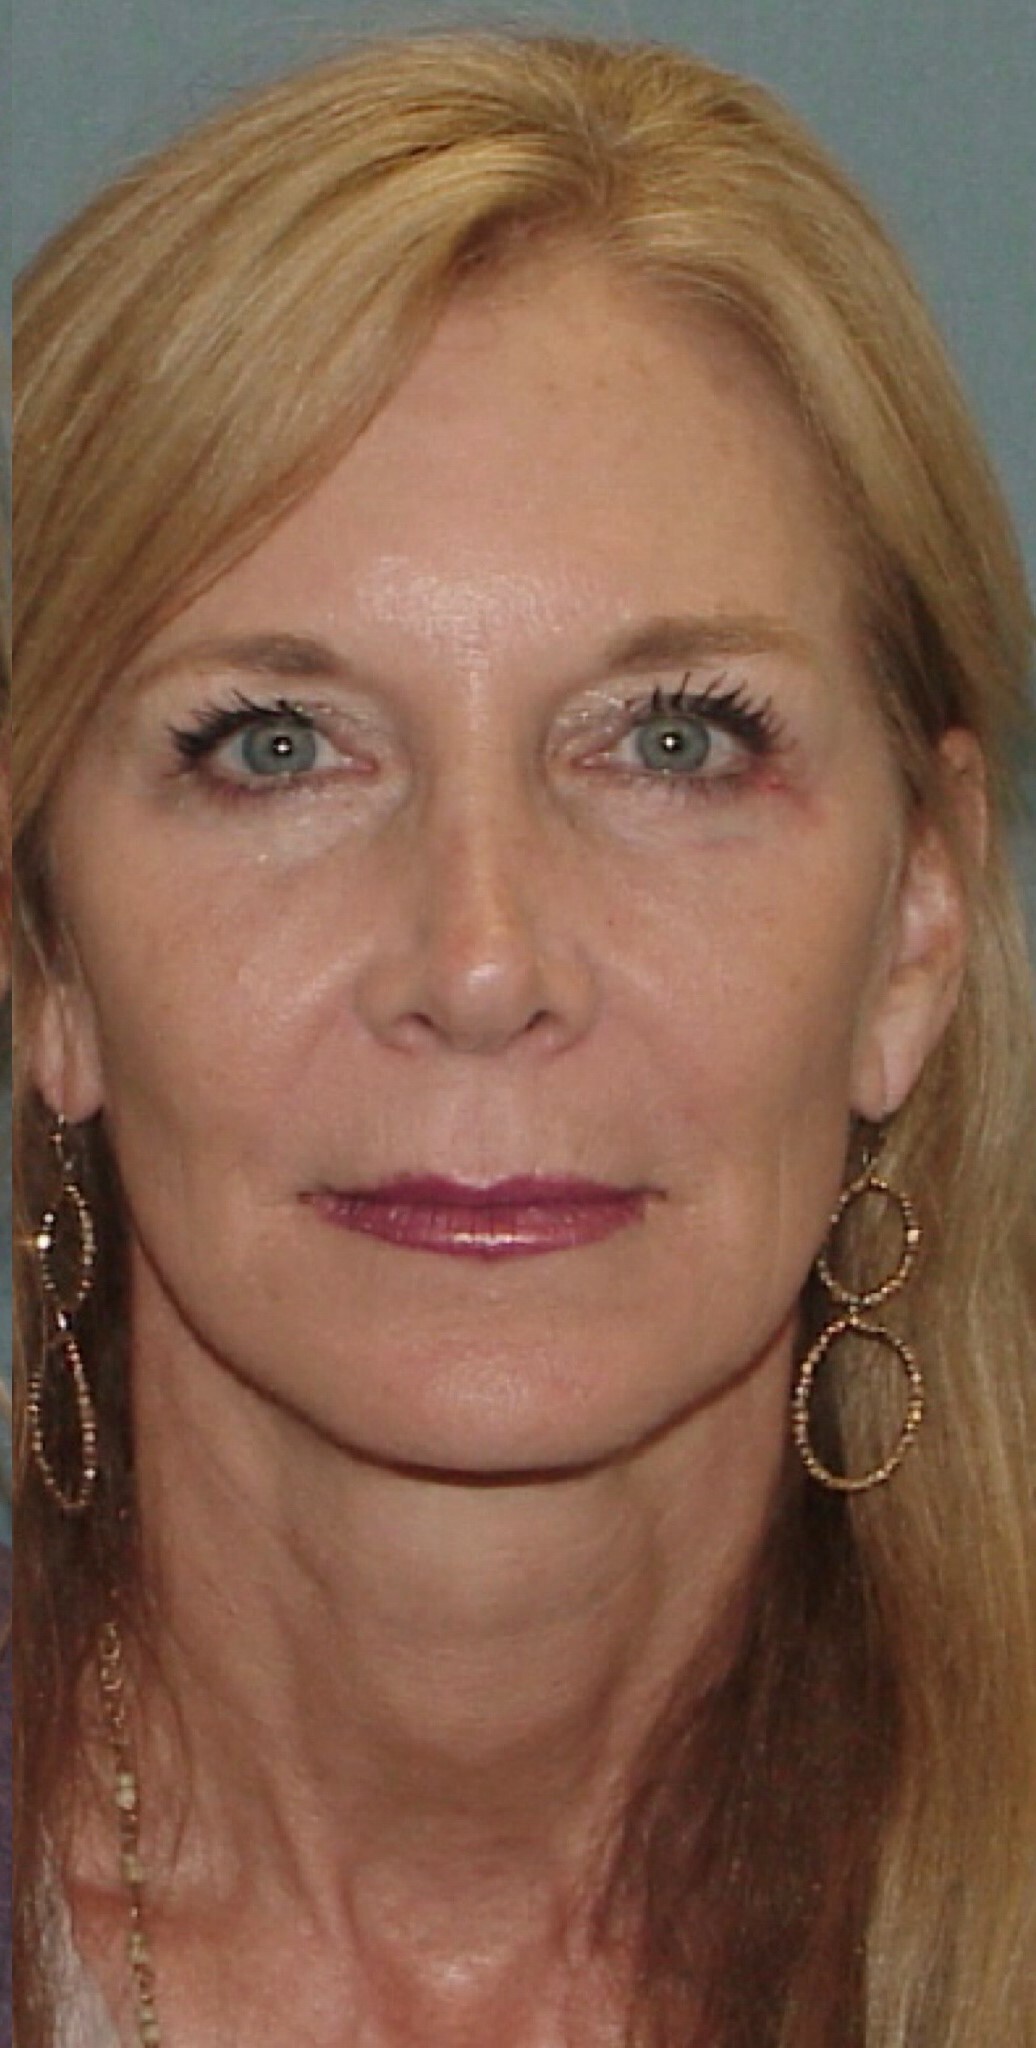 Photo of the patient’s face after the Facelift surgery. Set 1. Patient 1